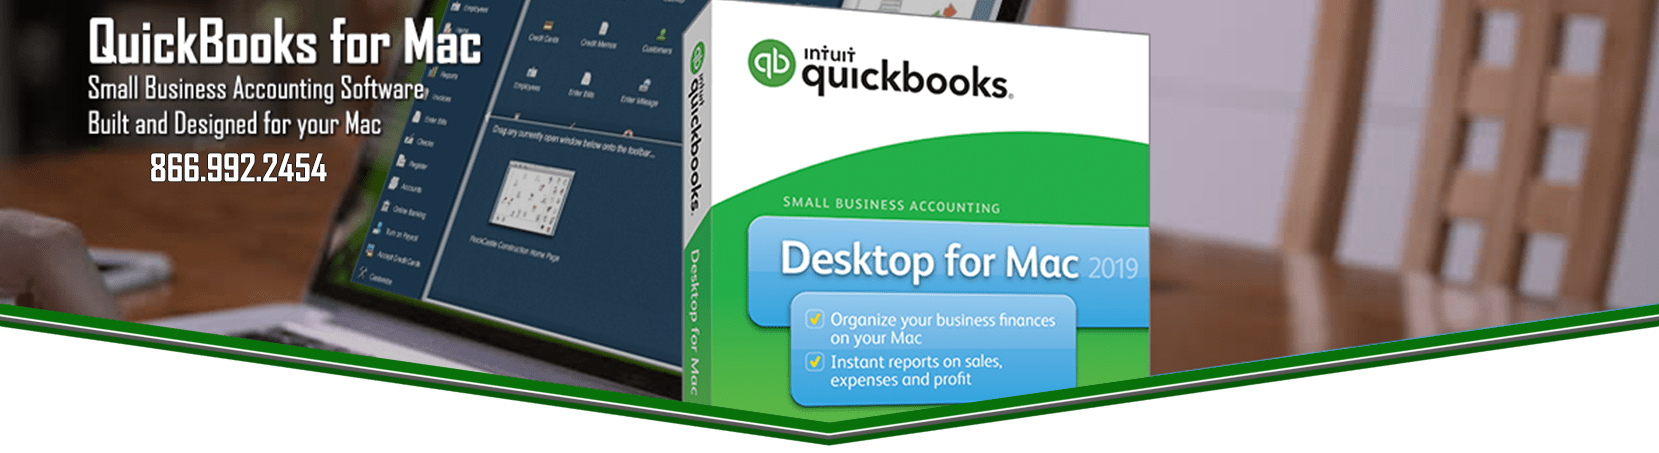 quickbooks 2016 download mac